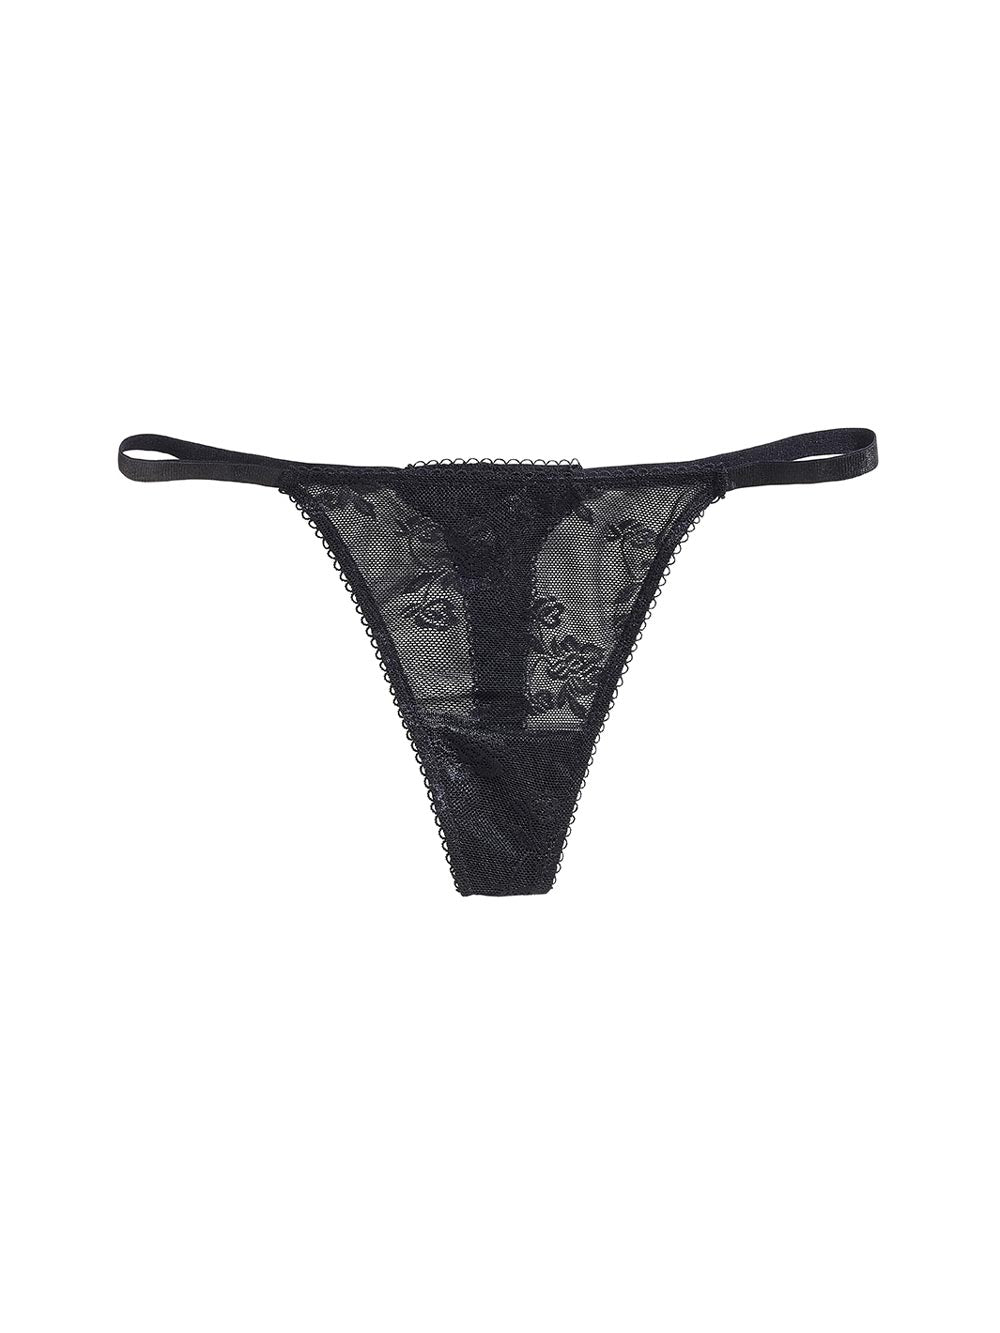 The Little Bra Company “Sascha Nude Lace” Strapless Bra 30C